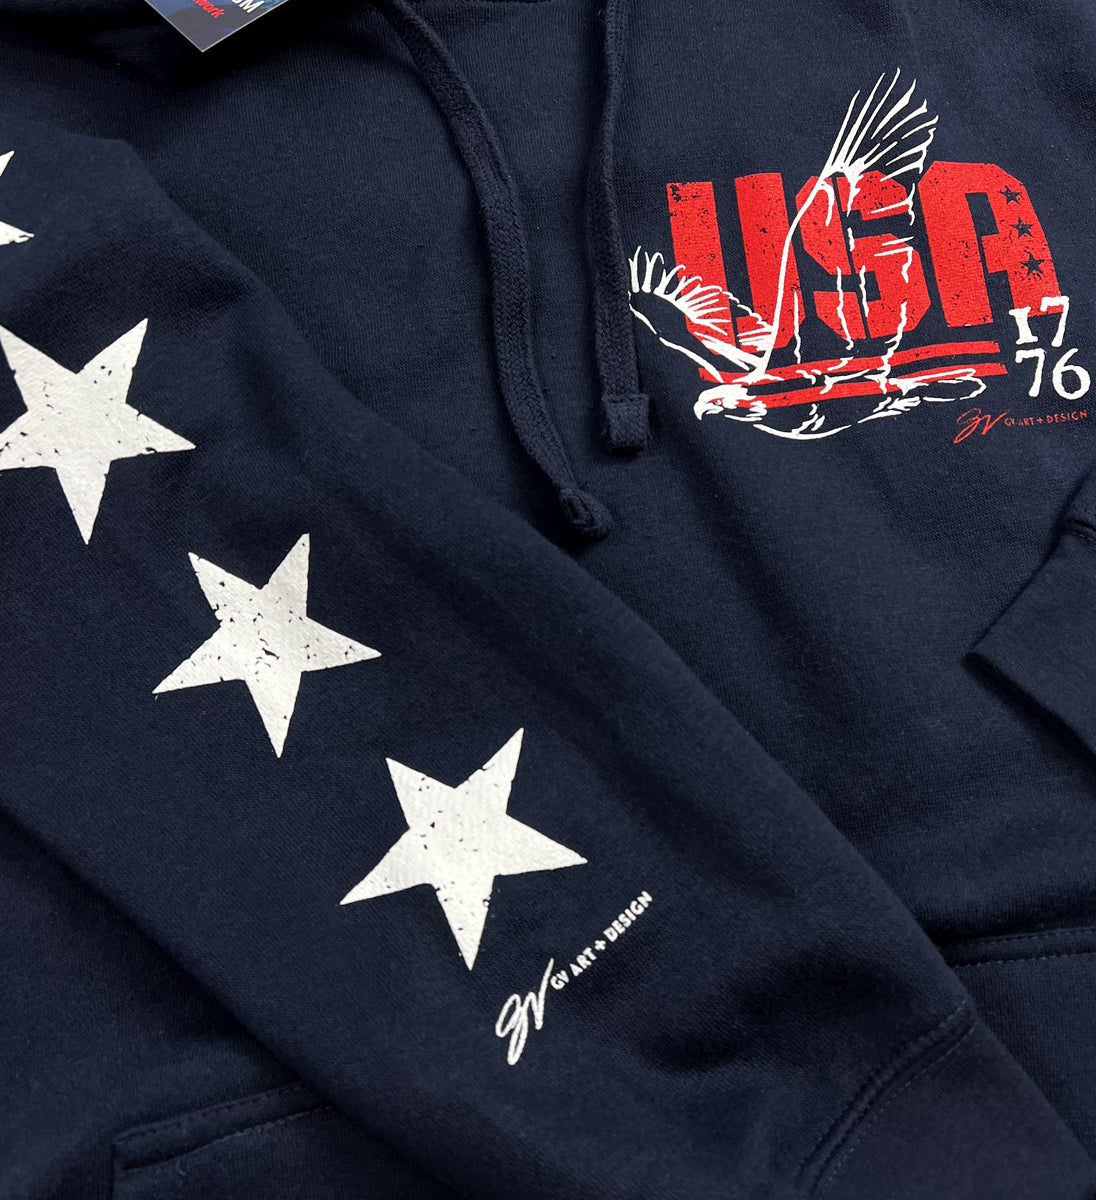 USA Stars and Stripes Hooded Sweatshirt